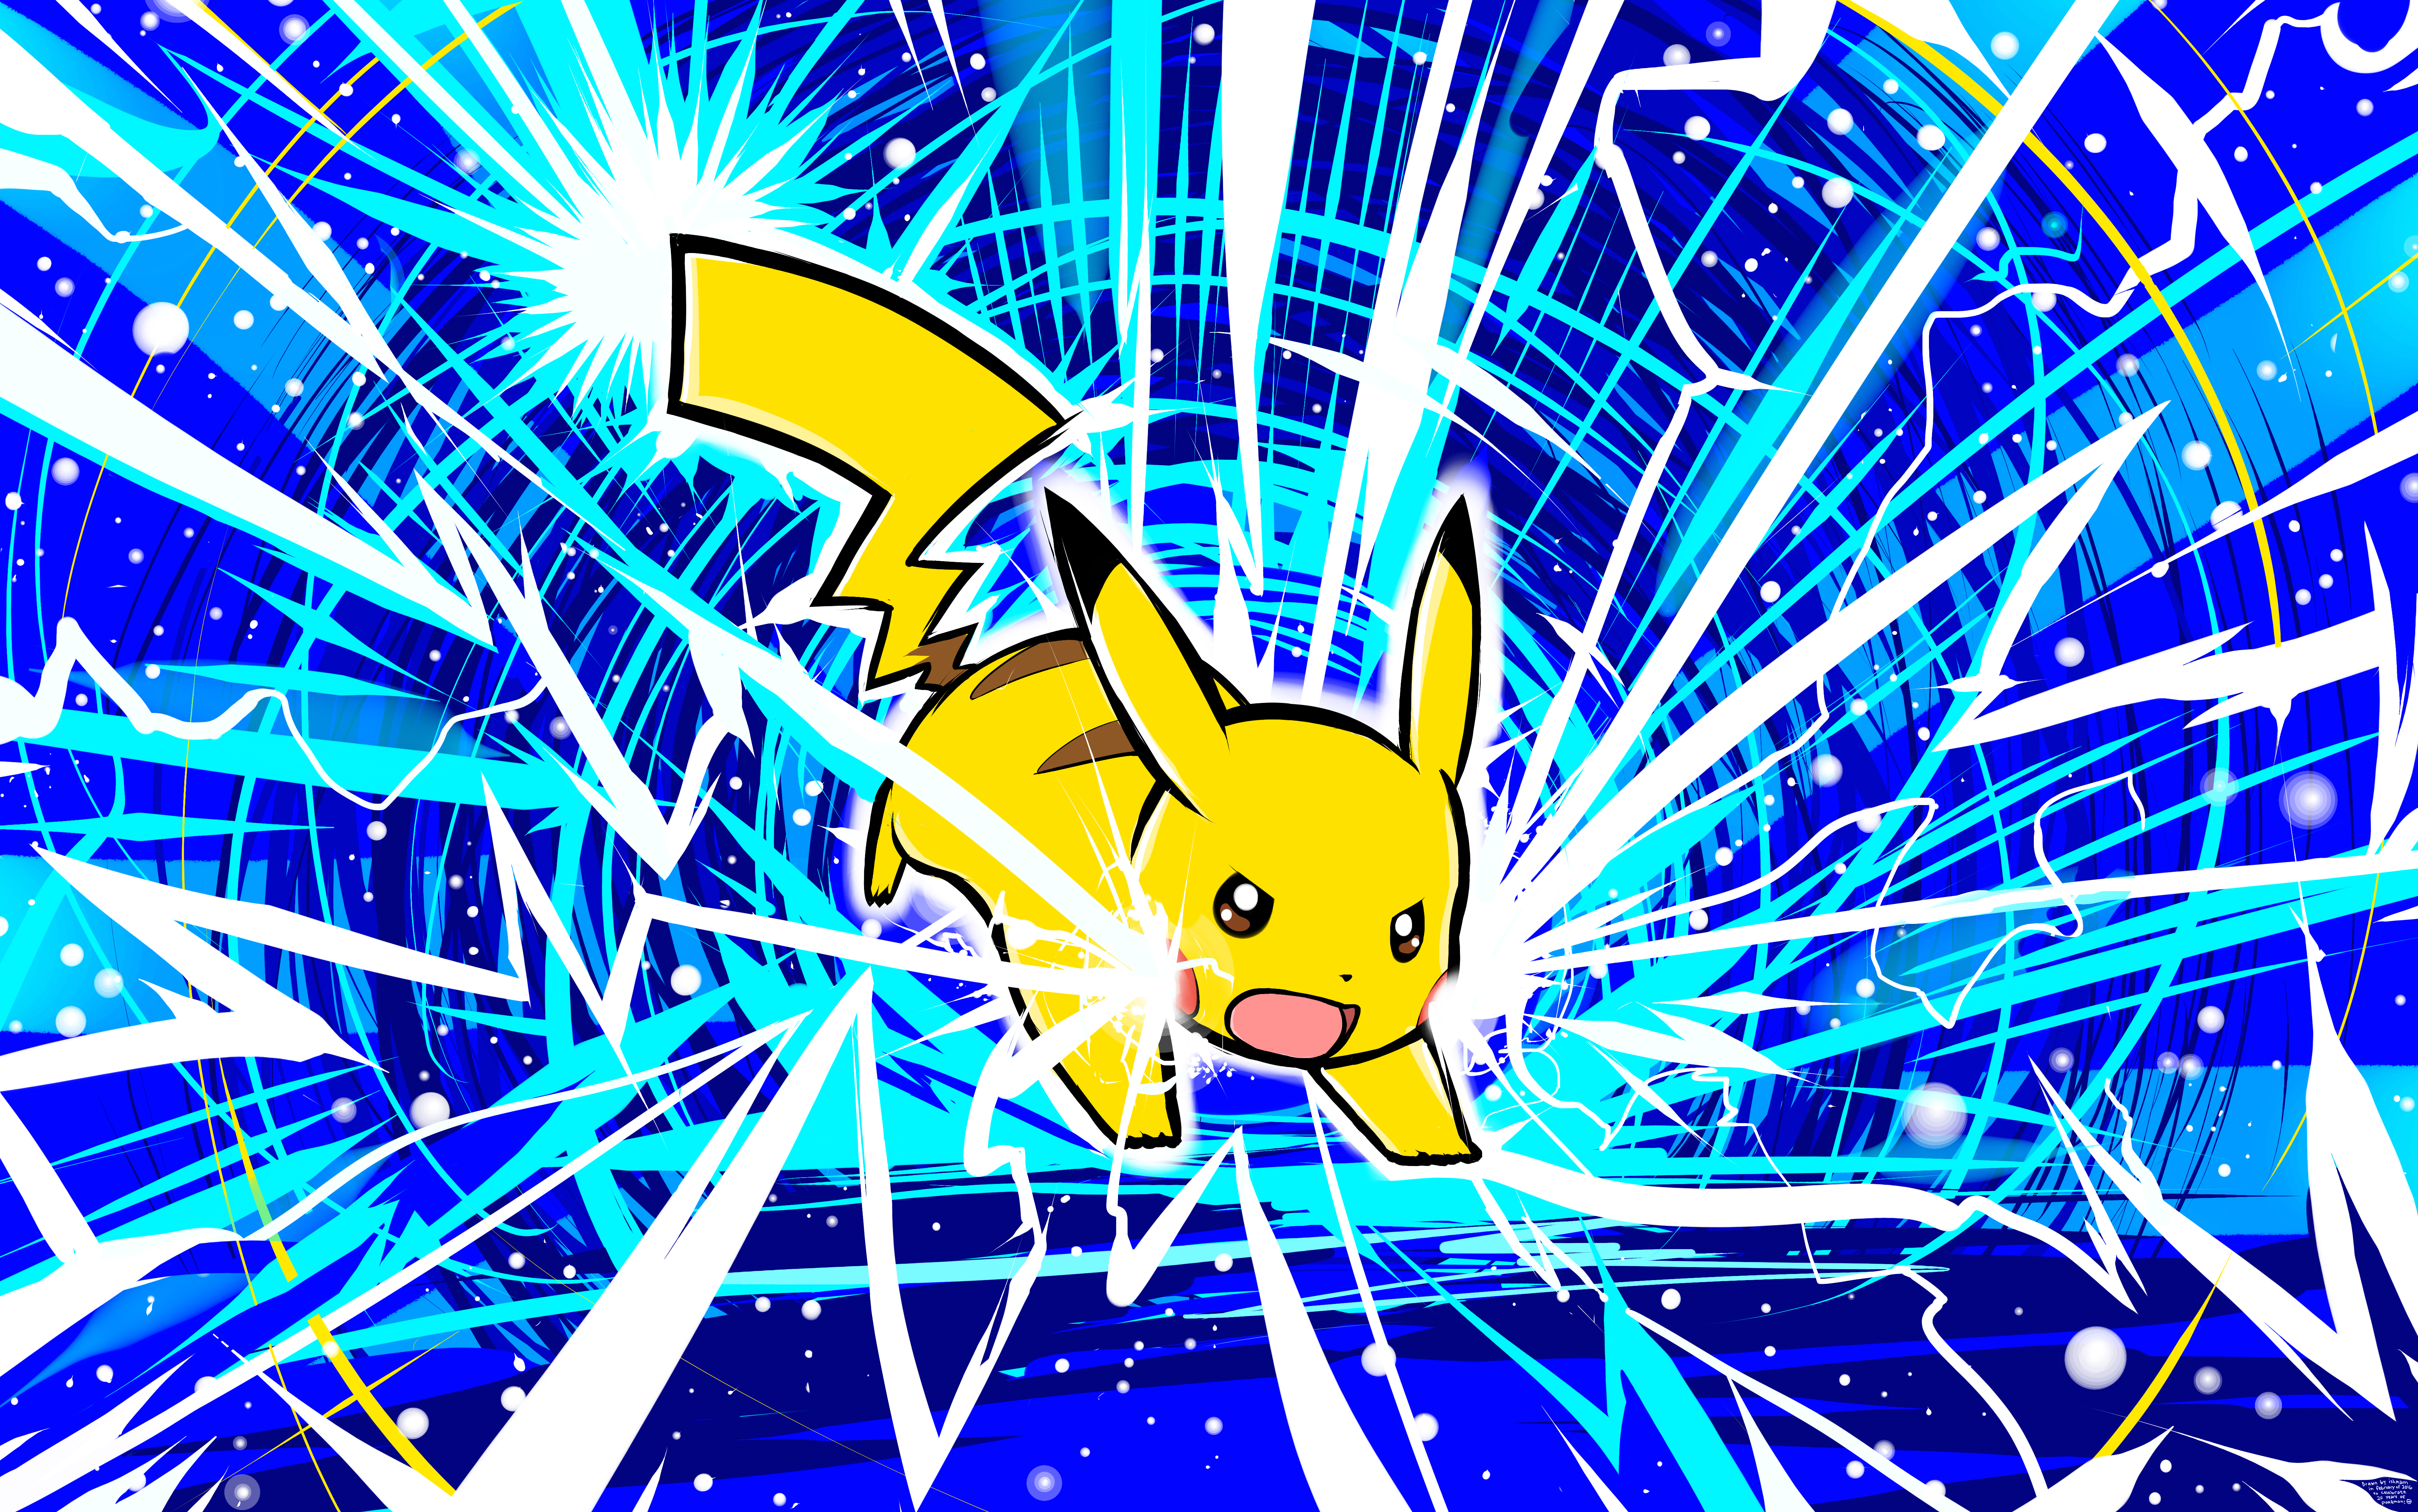 Pikachu | Thunderbolt by ishmam